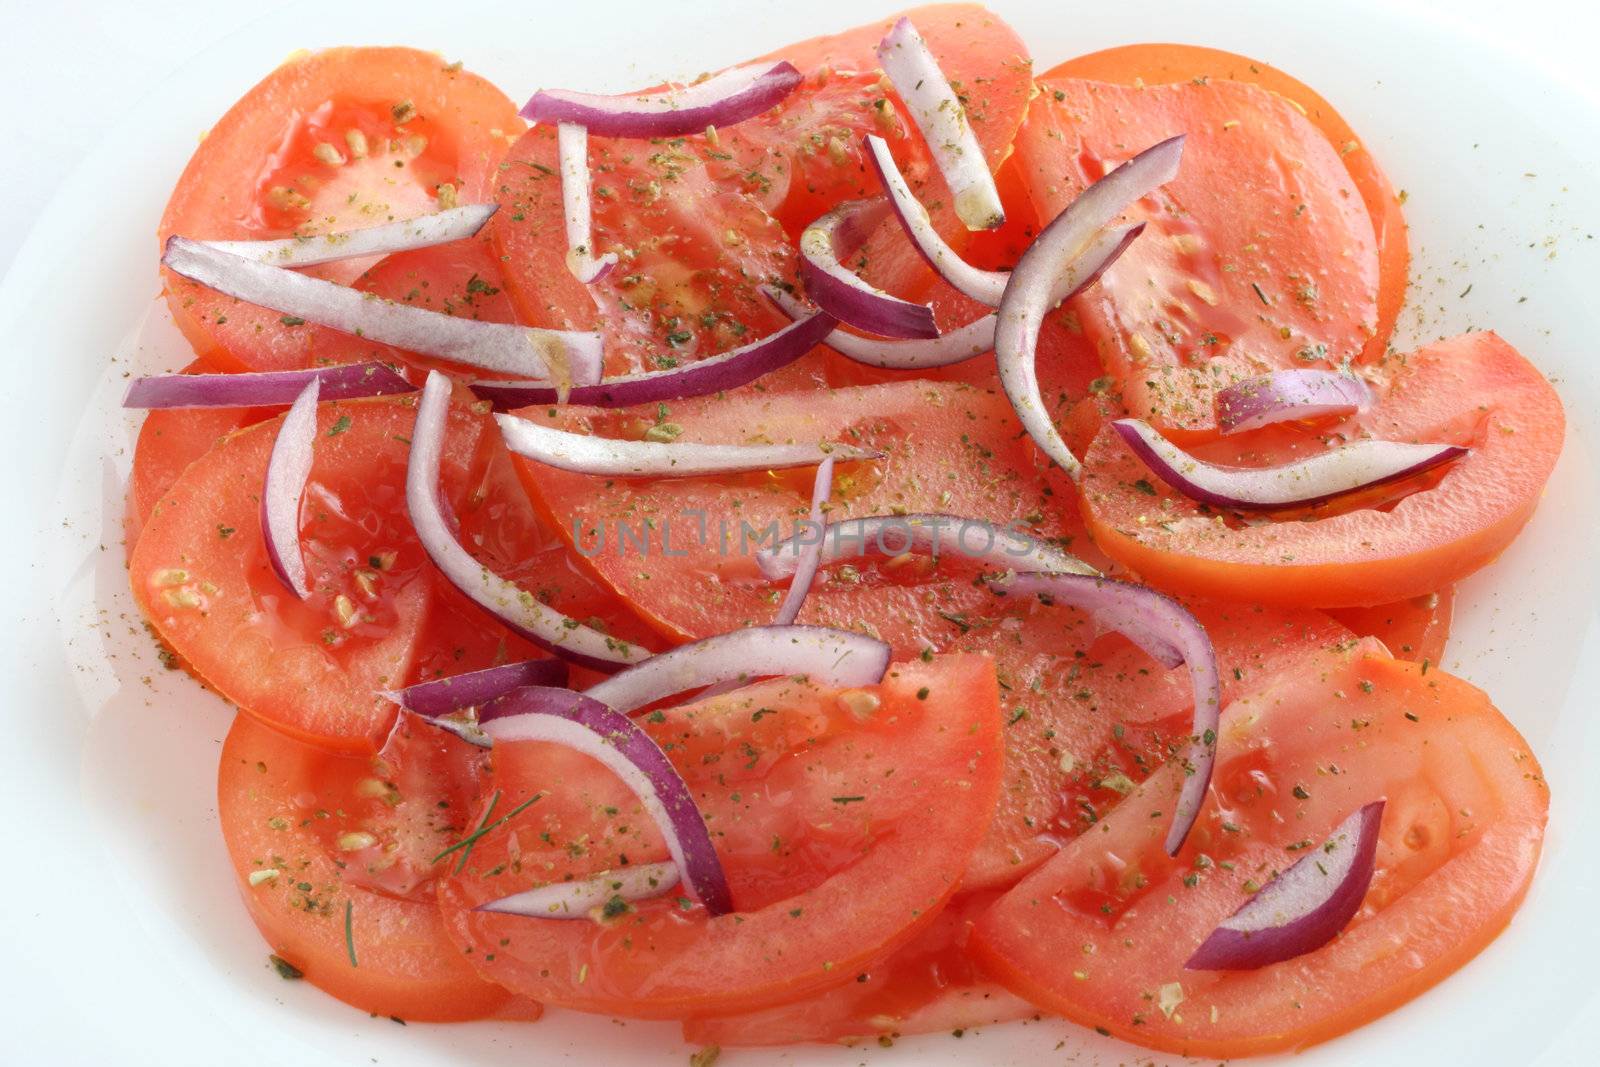 Tomato salad with onion by nataliamylova